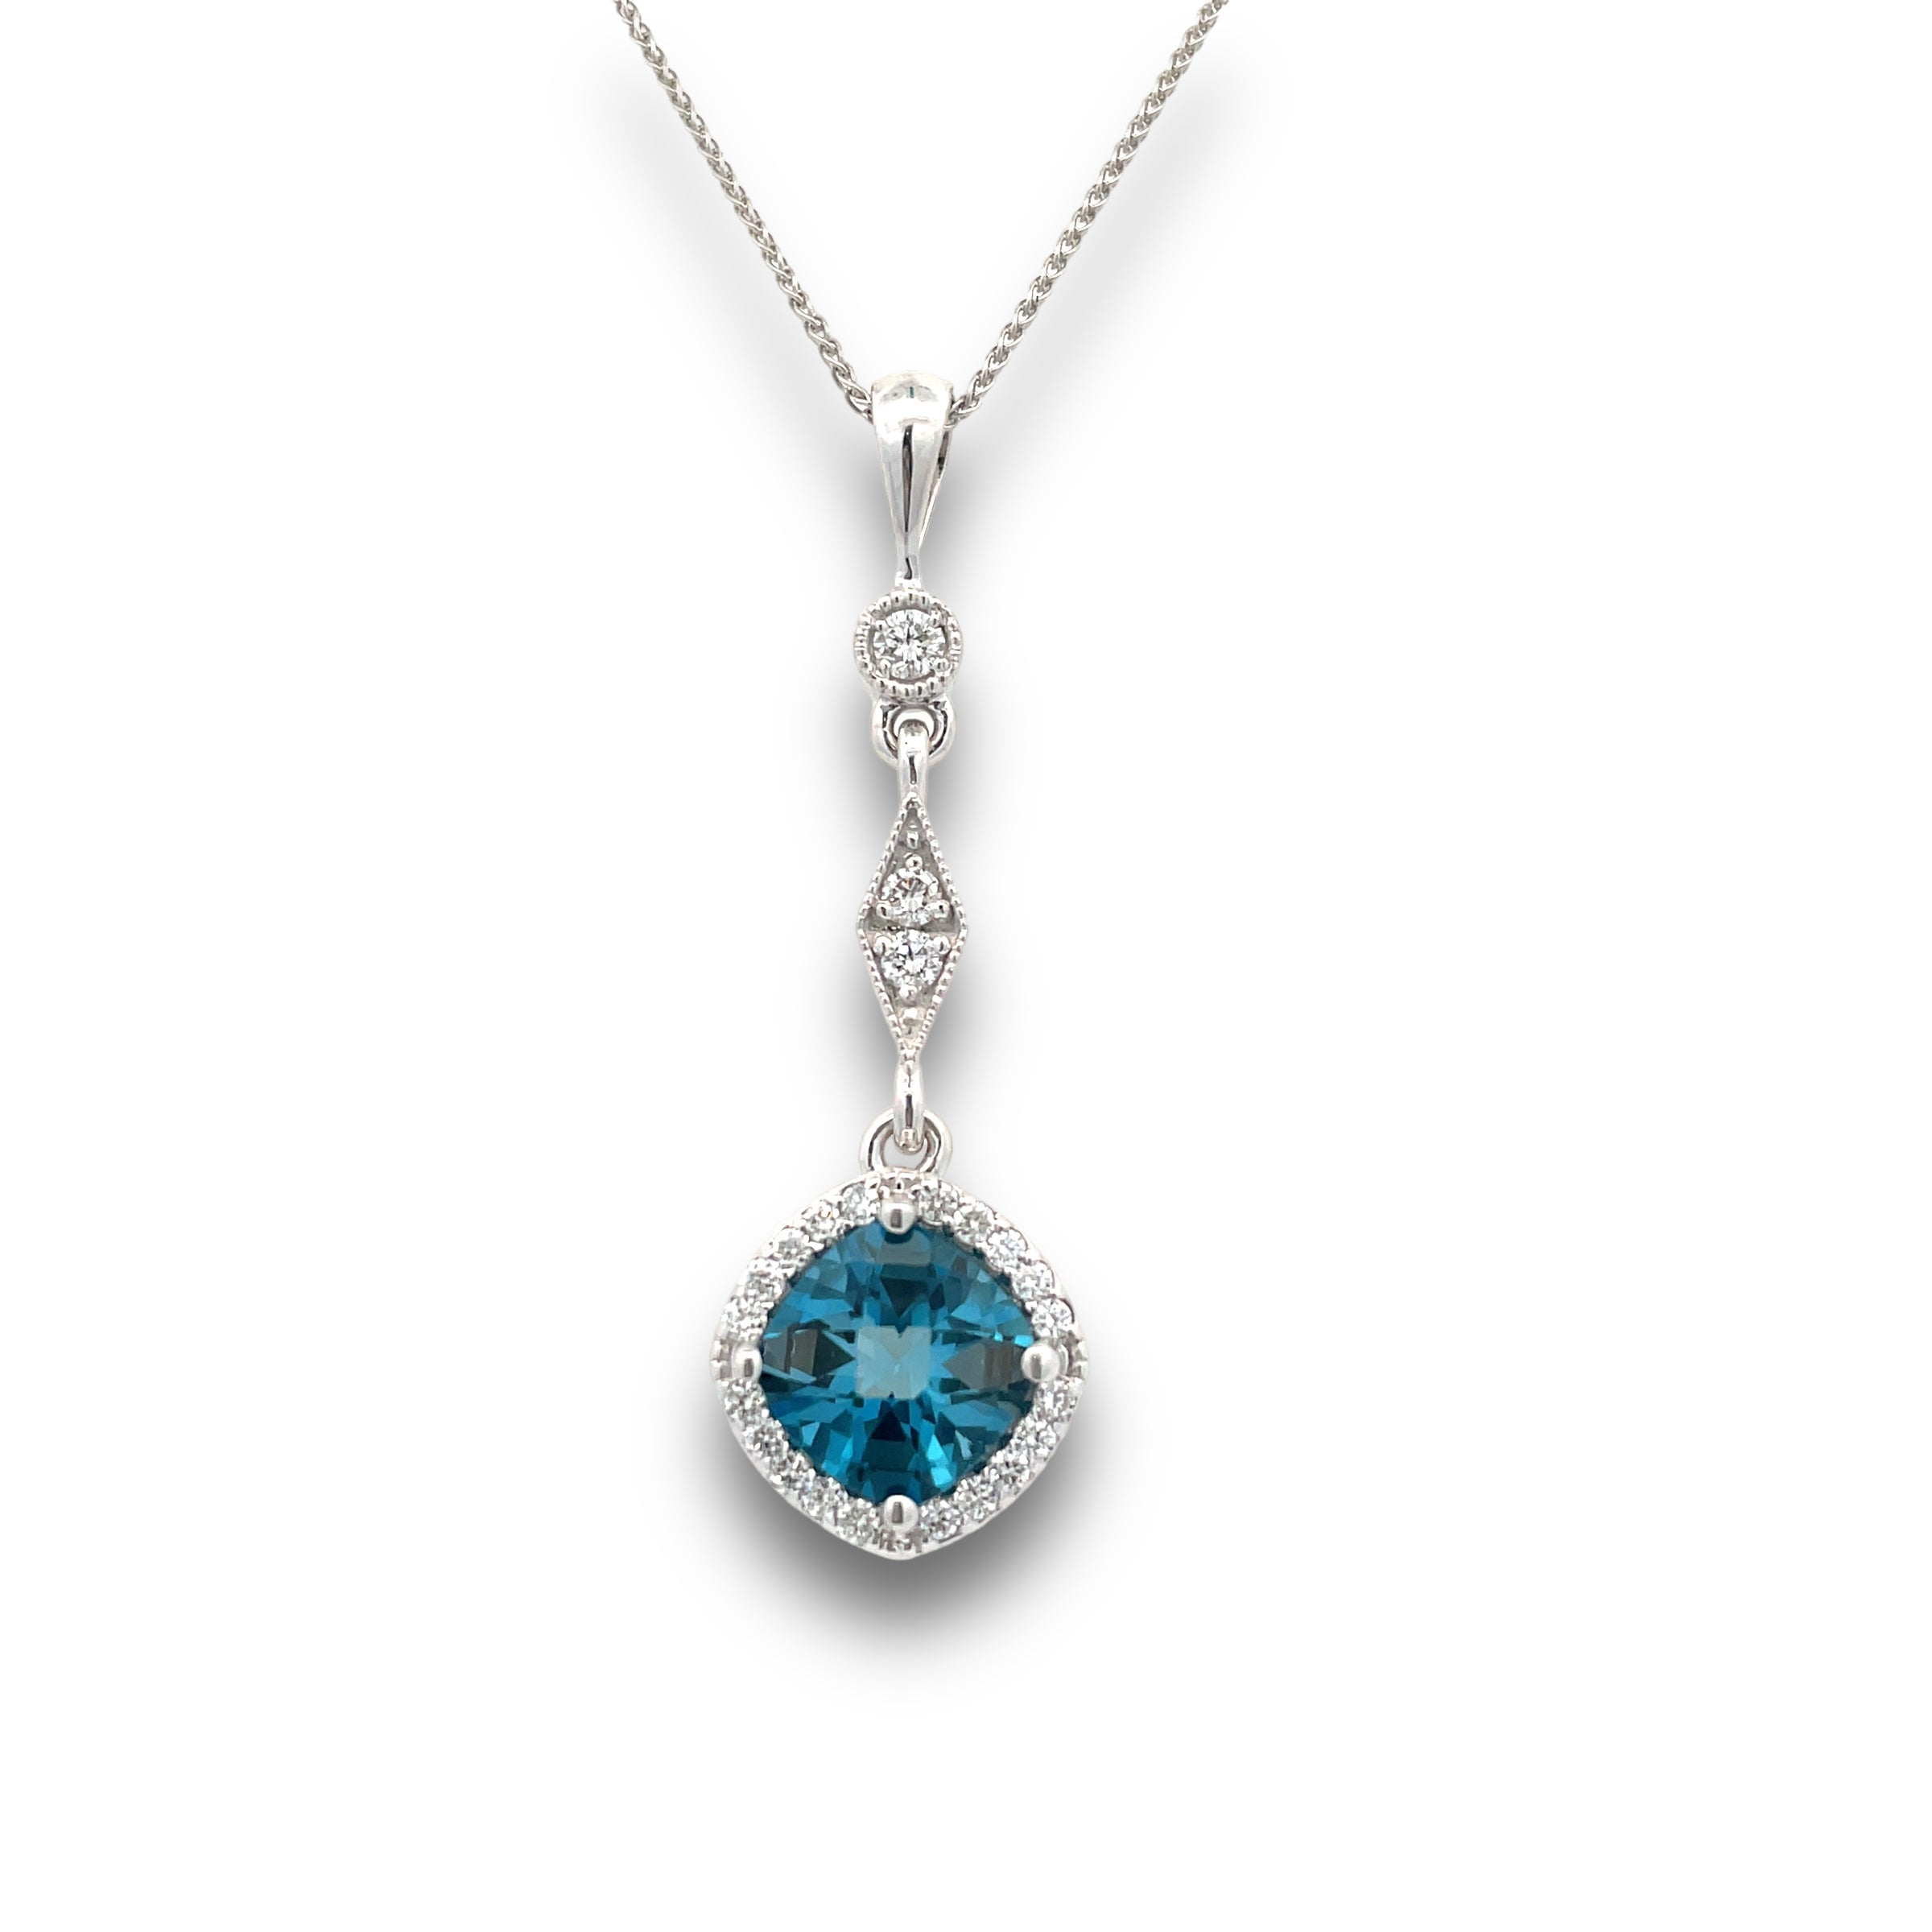 Allegra Necklace Cushion-cut London Blue Topaz & Diamonds in 14k White Gold